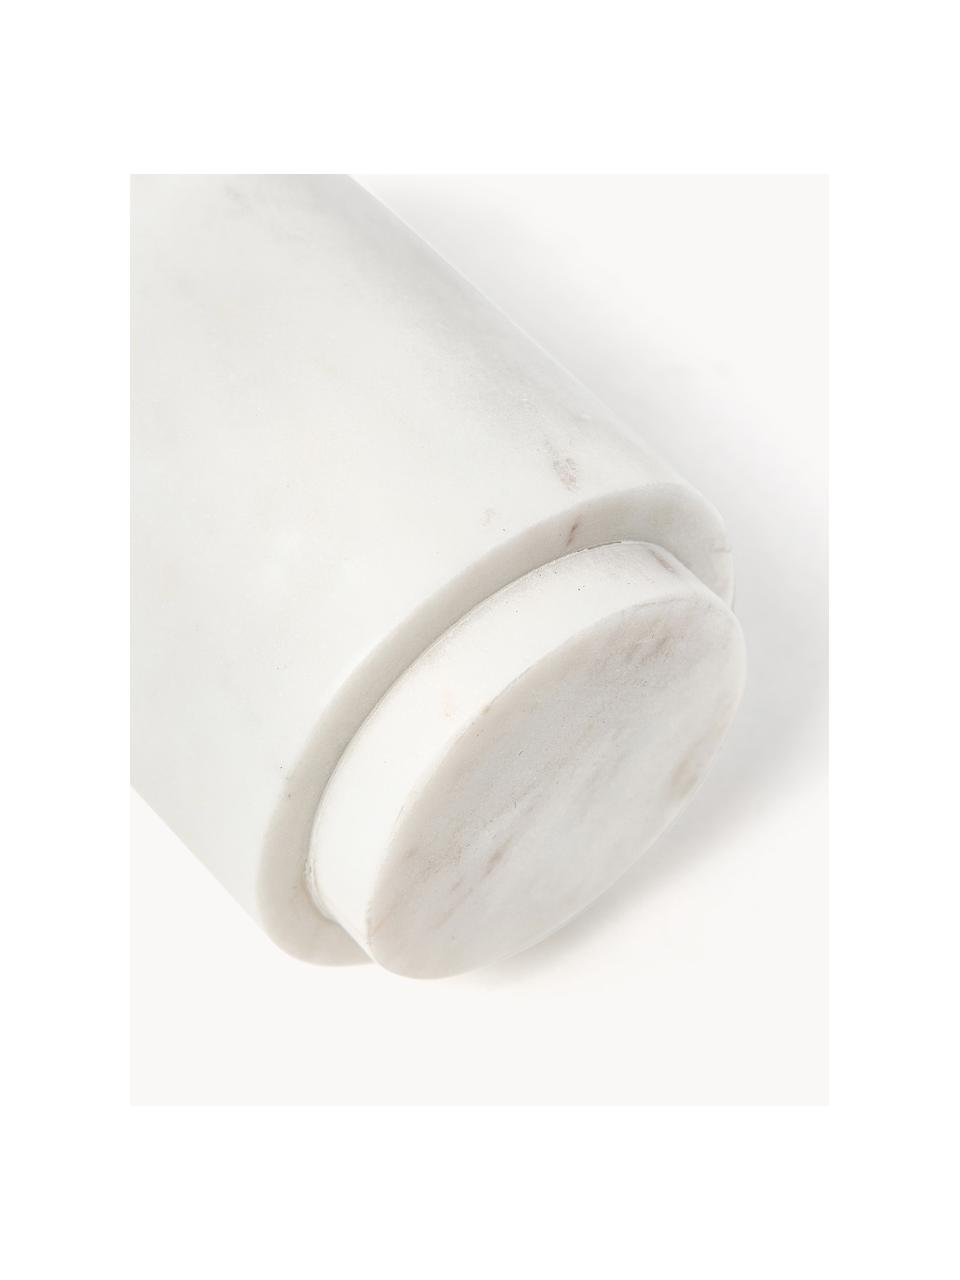 Dosificador de jabón de mármol Simba, Recipiente: mármol, Dosificador: plástico, Mármol blanco, dorado, Ø 8 x Al 19 cm